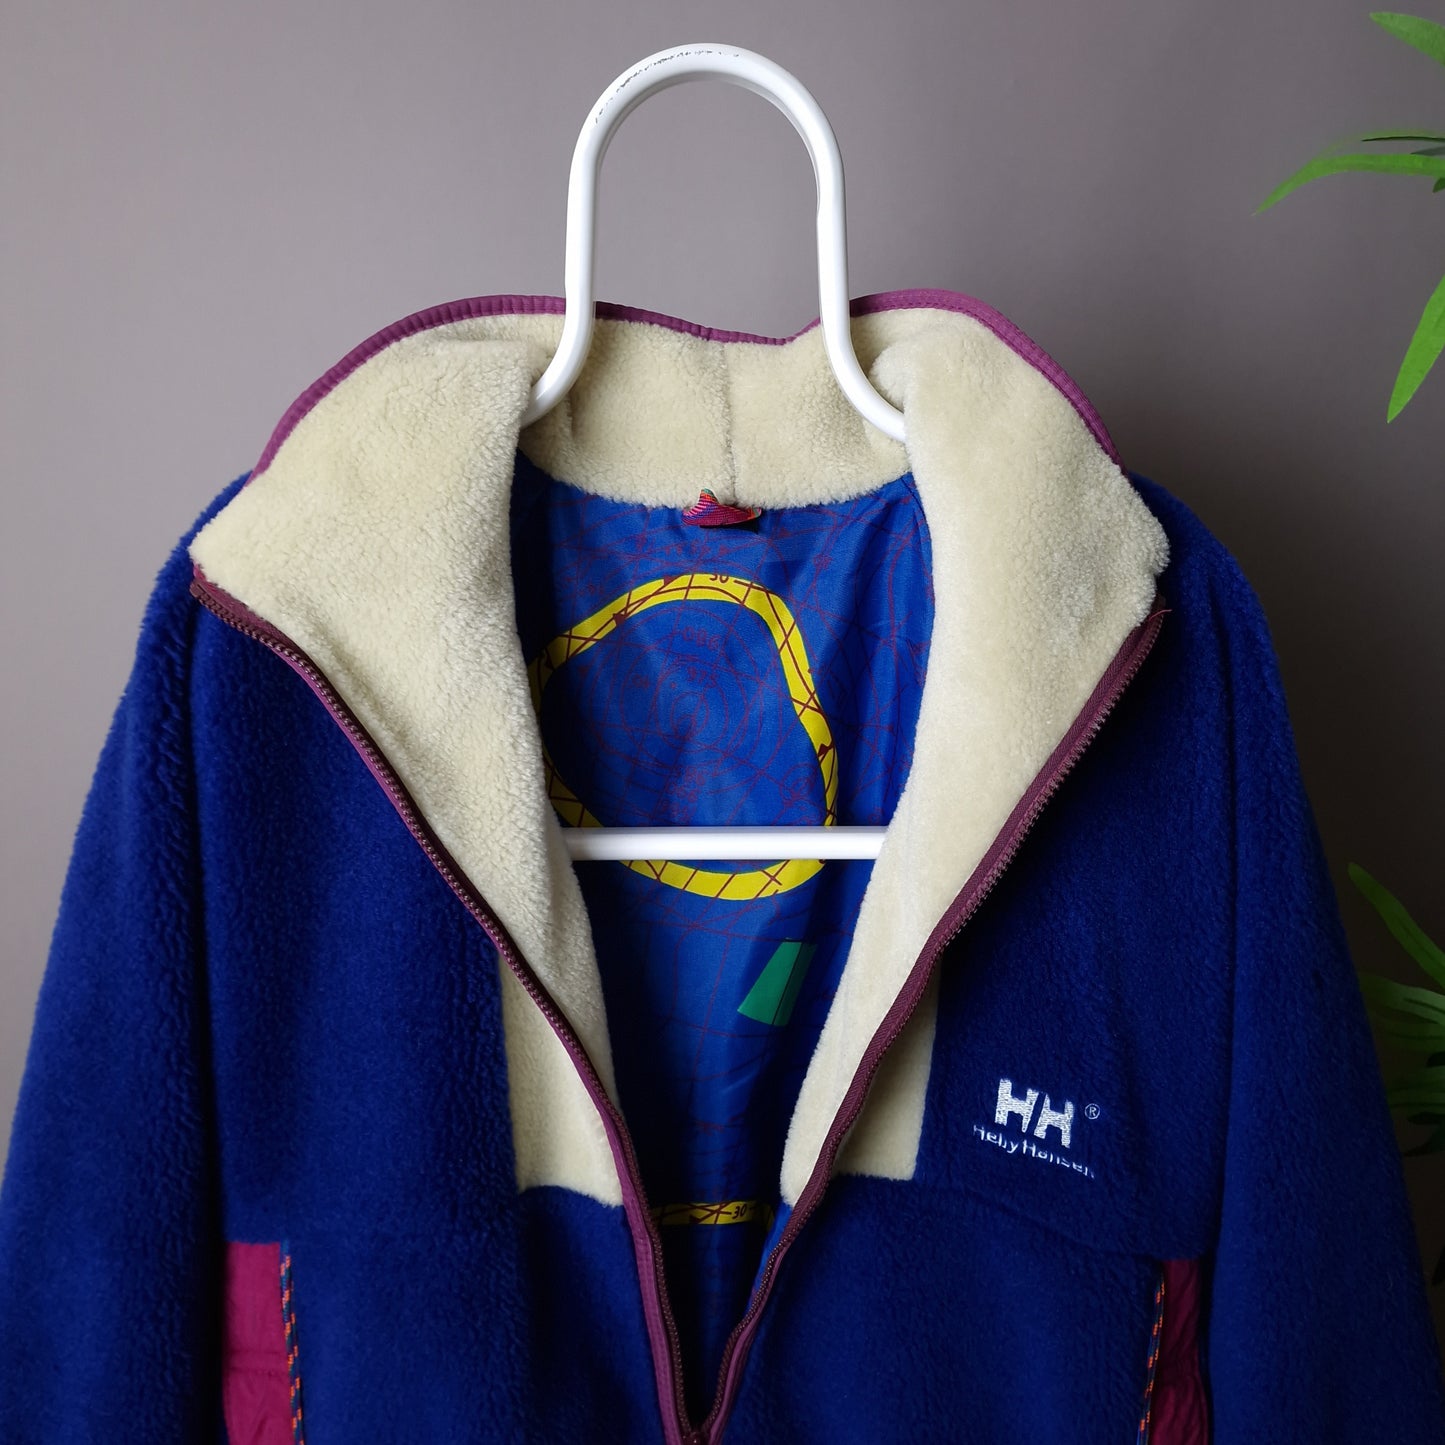 Vintage Helly Hansen fleece jacket in blue and pink - XL